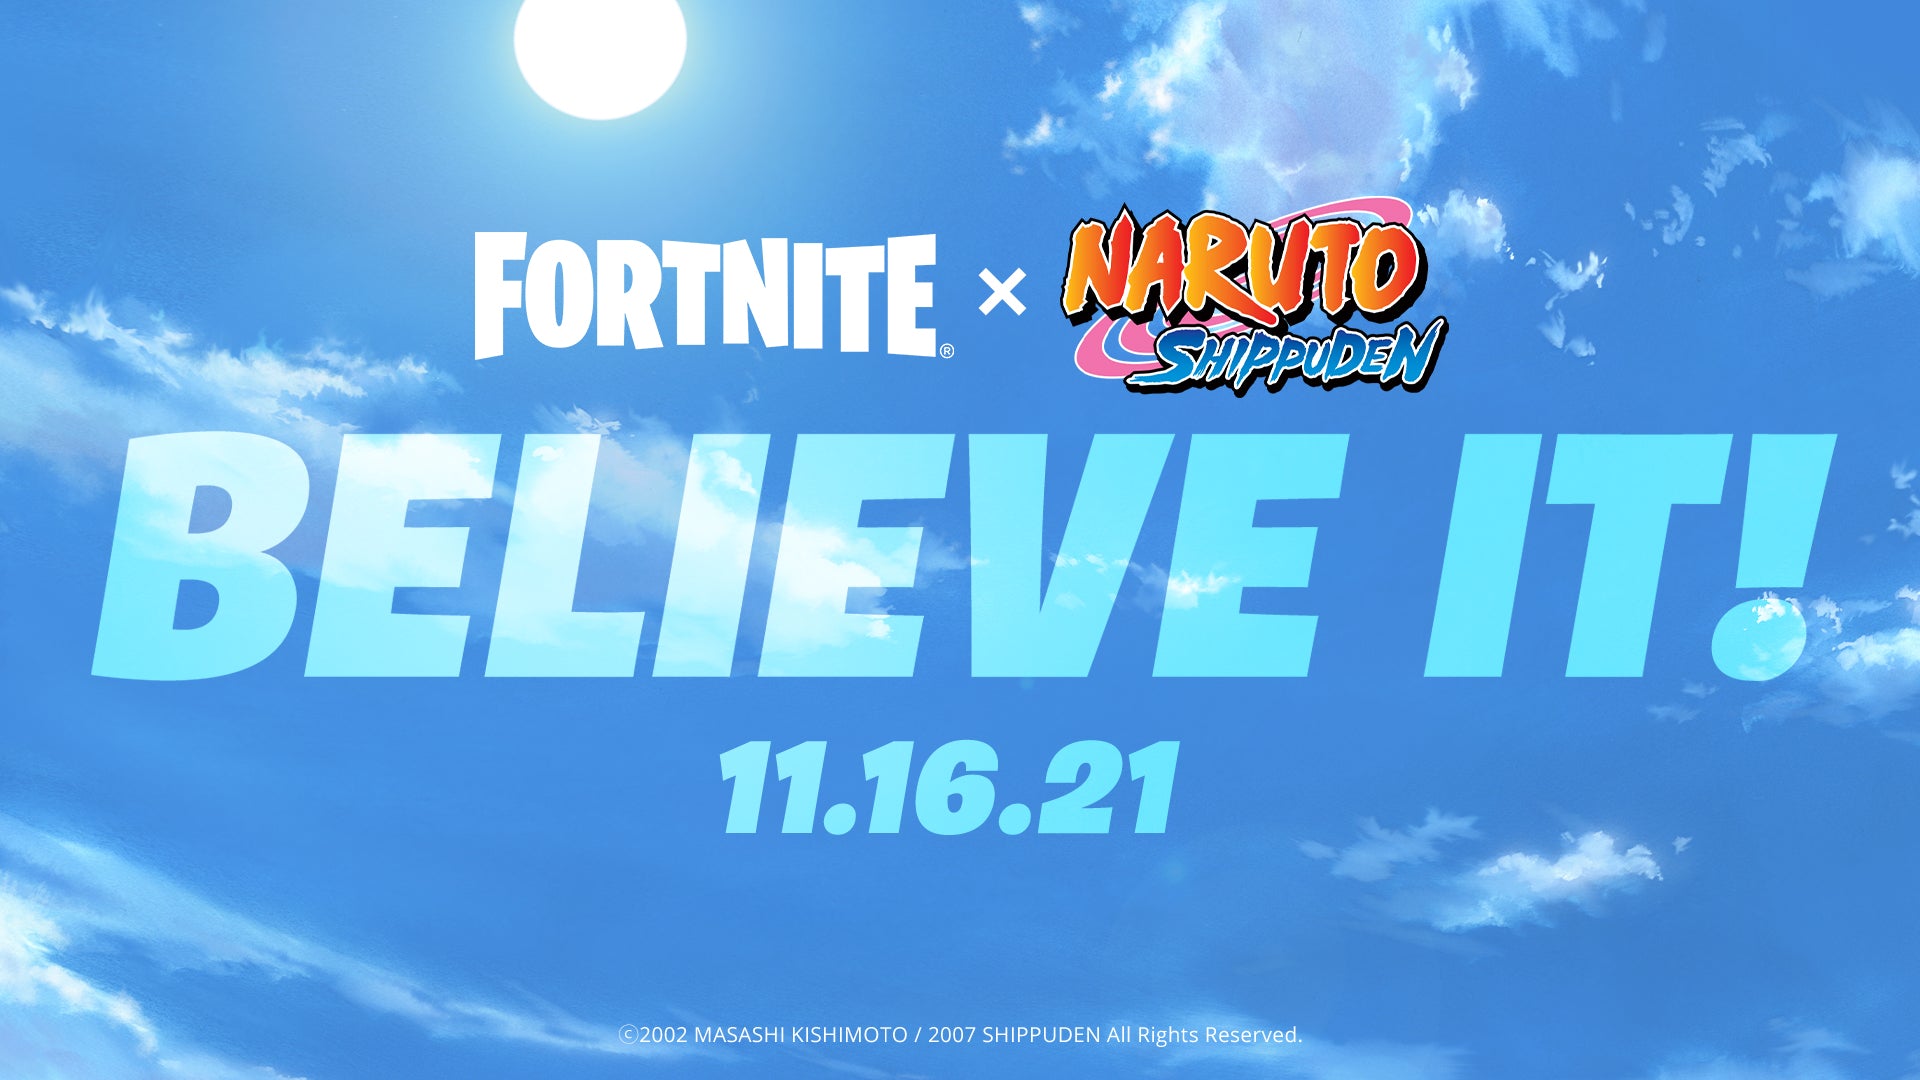 Fortnite Teases Naruto Collaboration For November 16